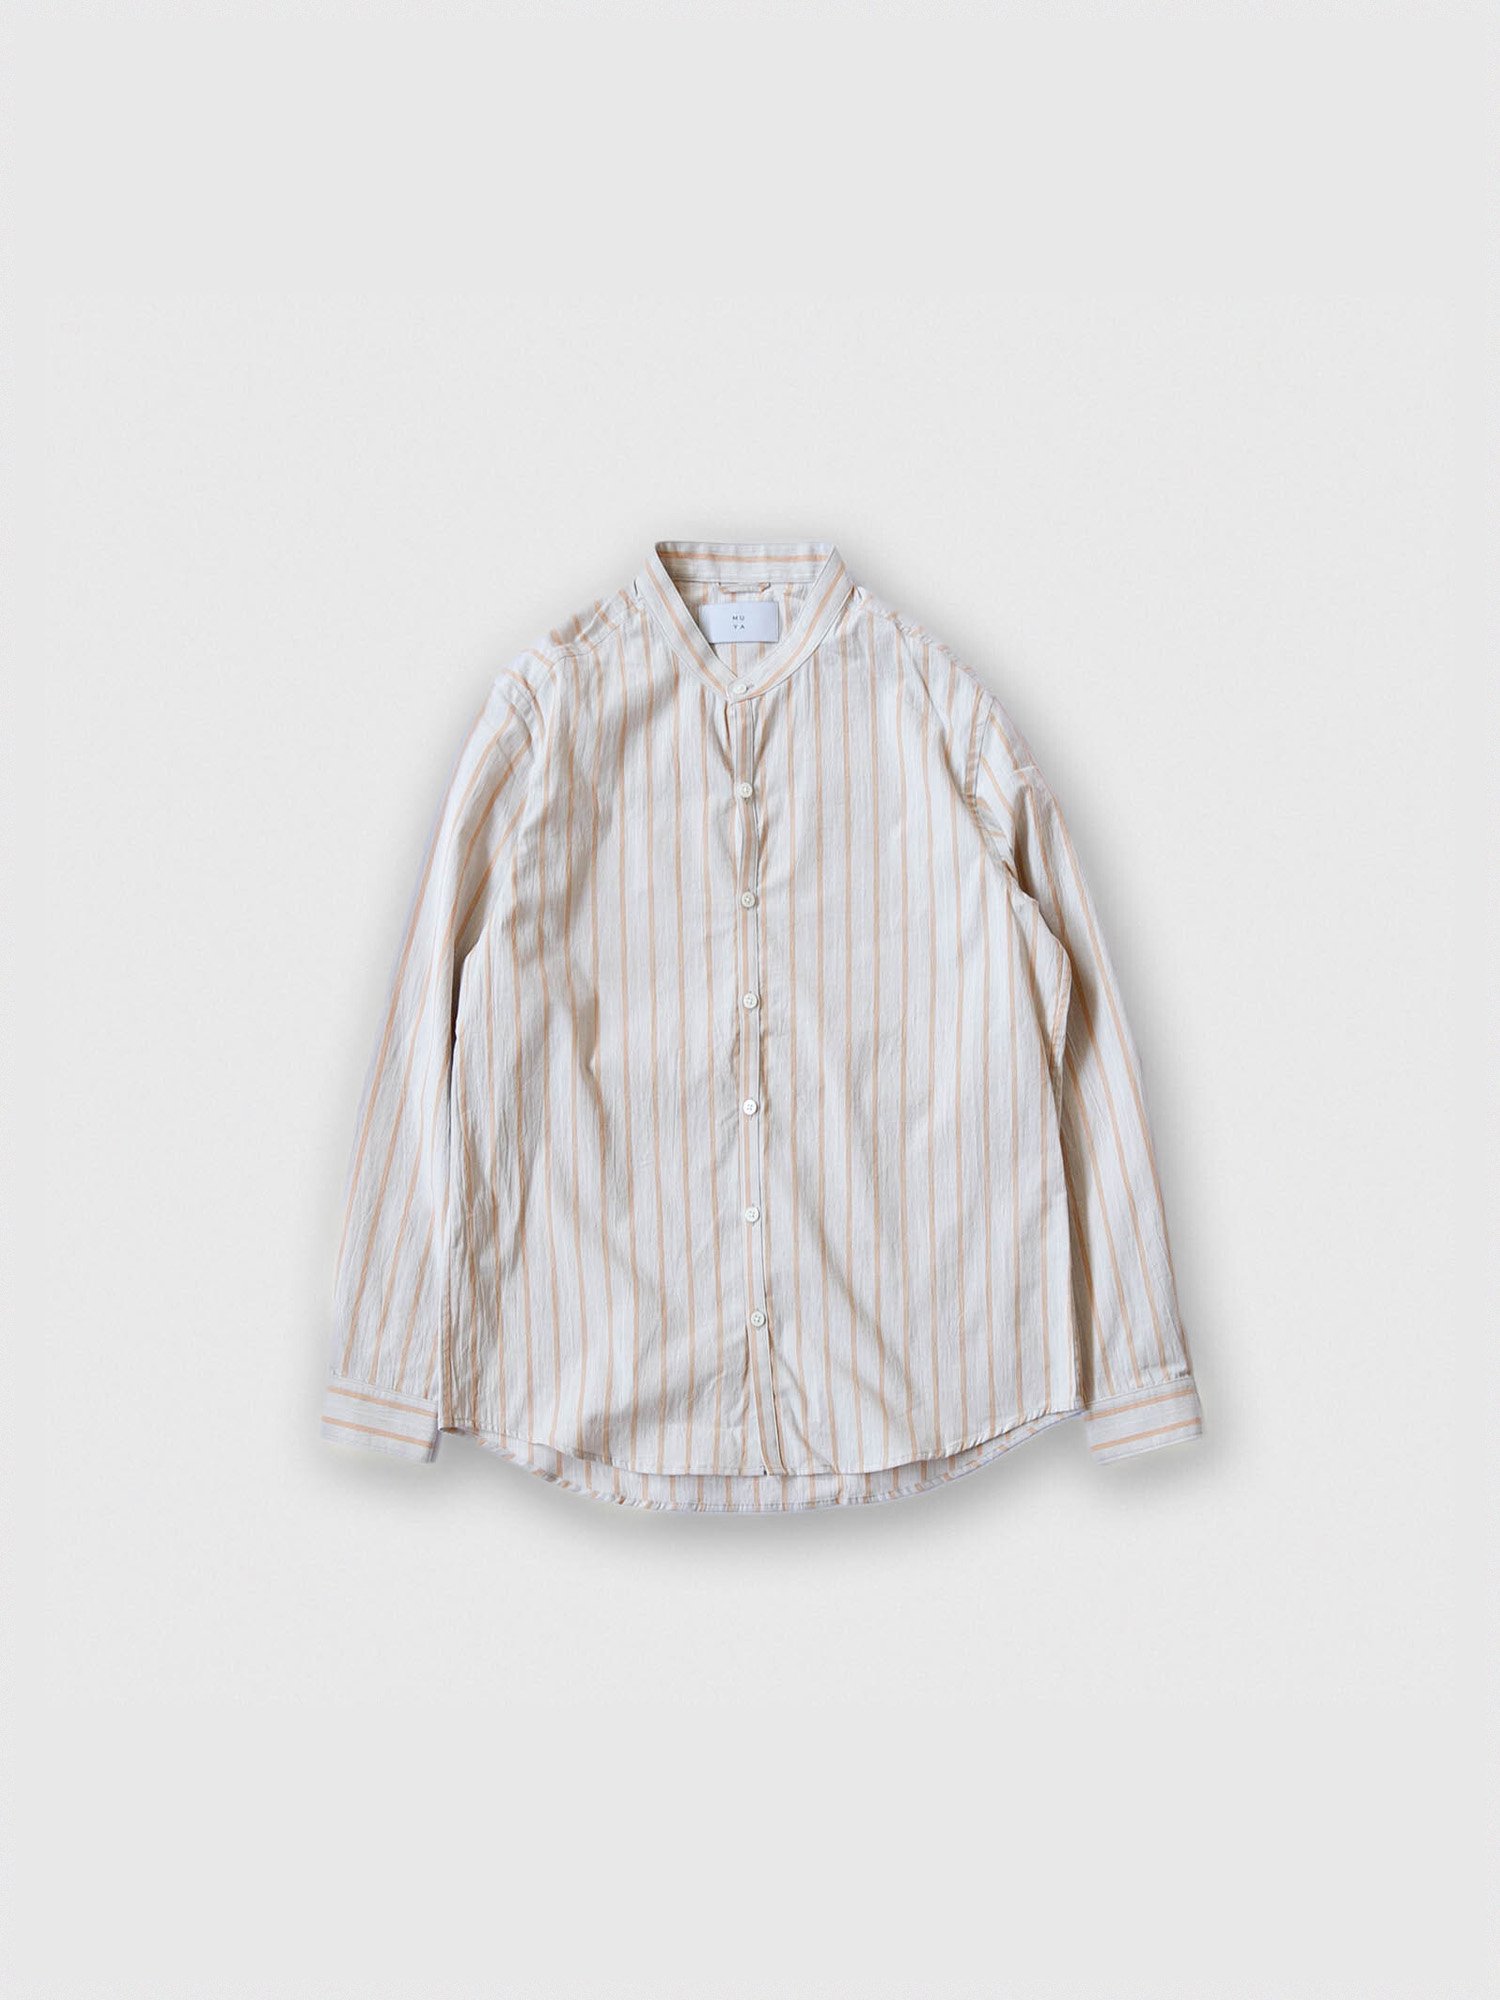 Atelier shirts relax stand collar<br />/BeigeOrange<br />/No.2501